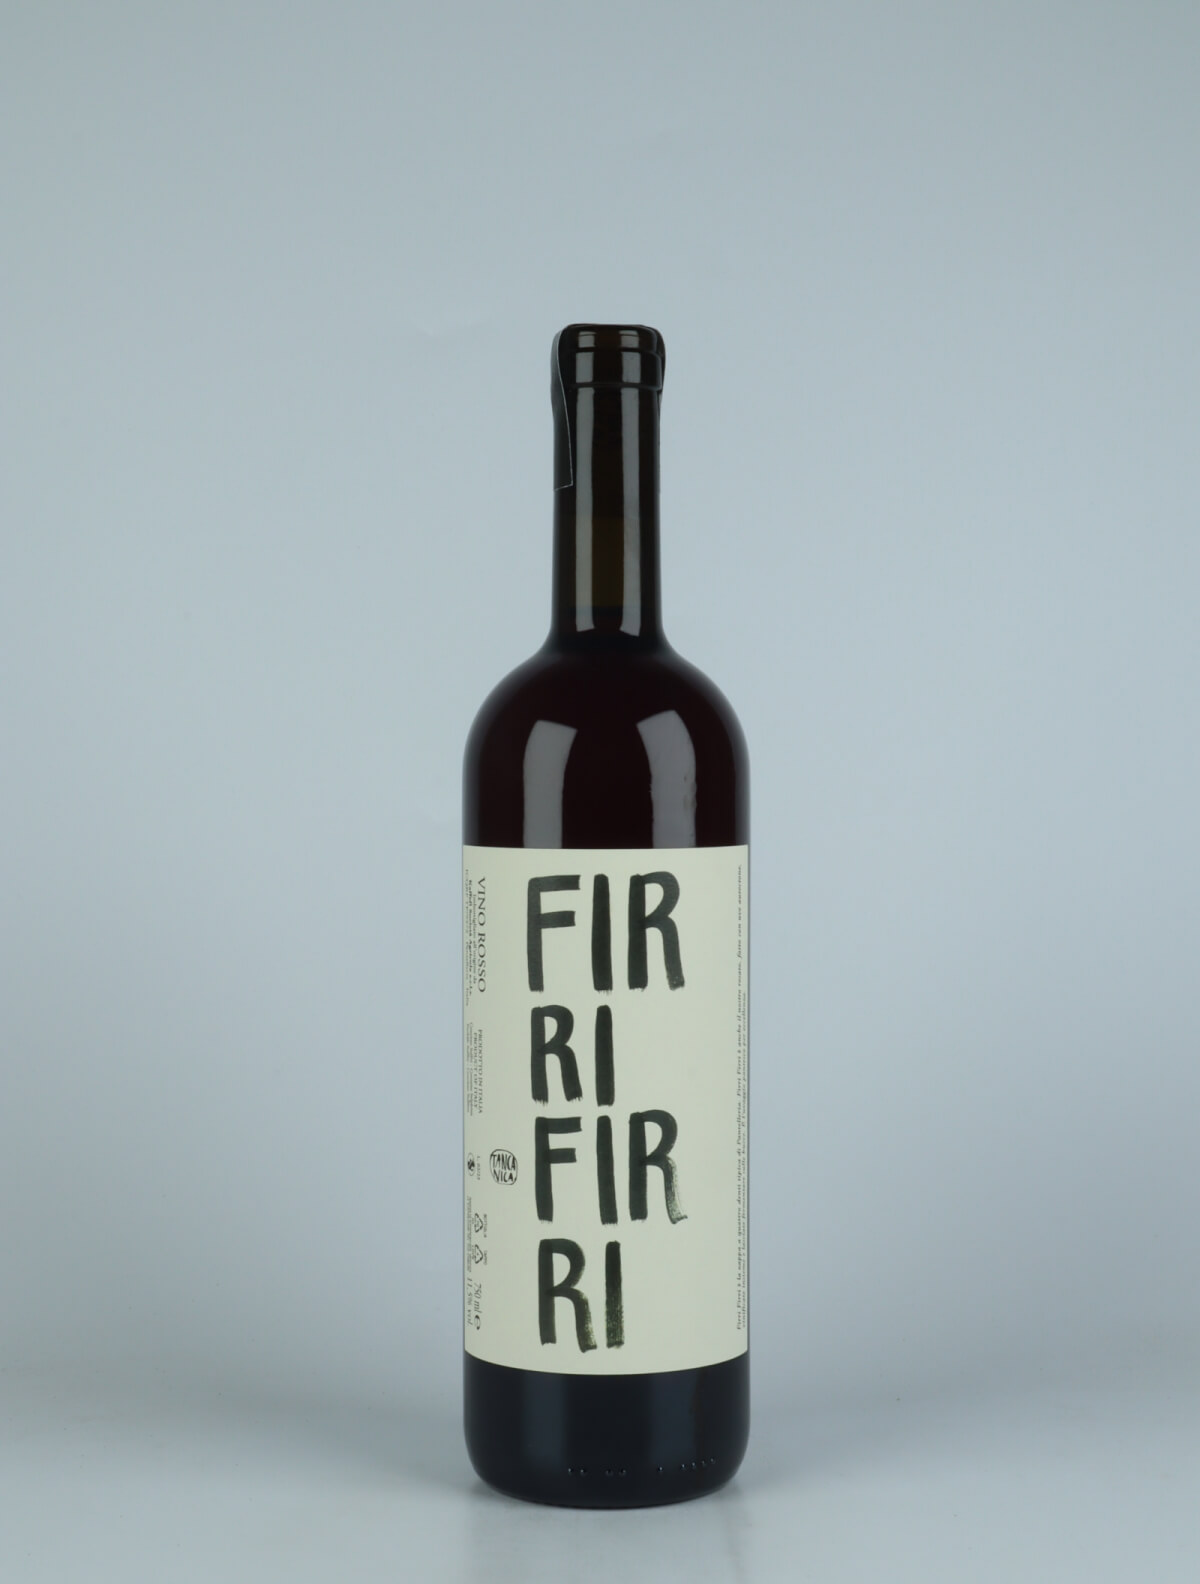 A bottle 2022 Firri Firri Red wine from Tanca Nica, Sicily in Italy